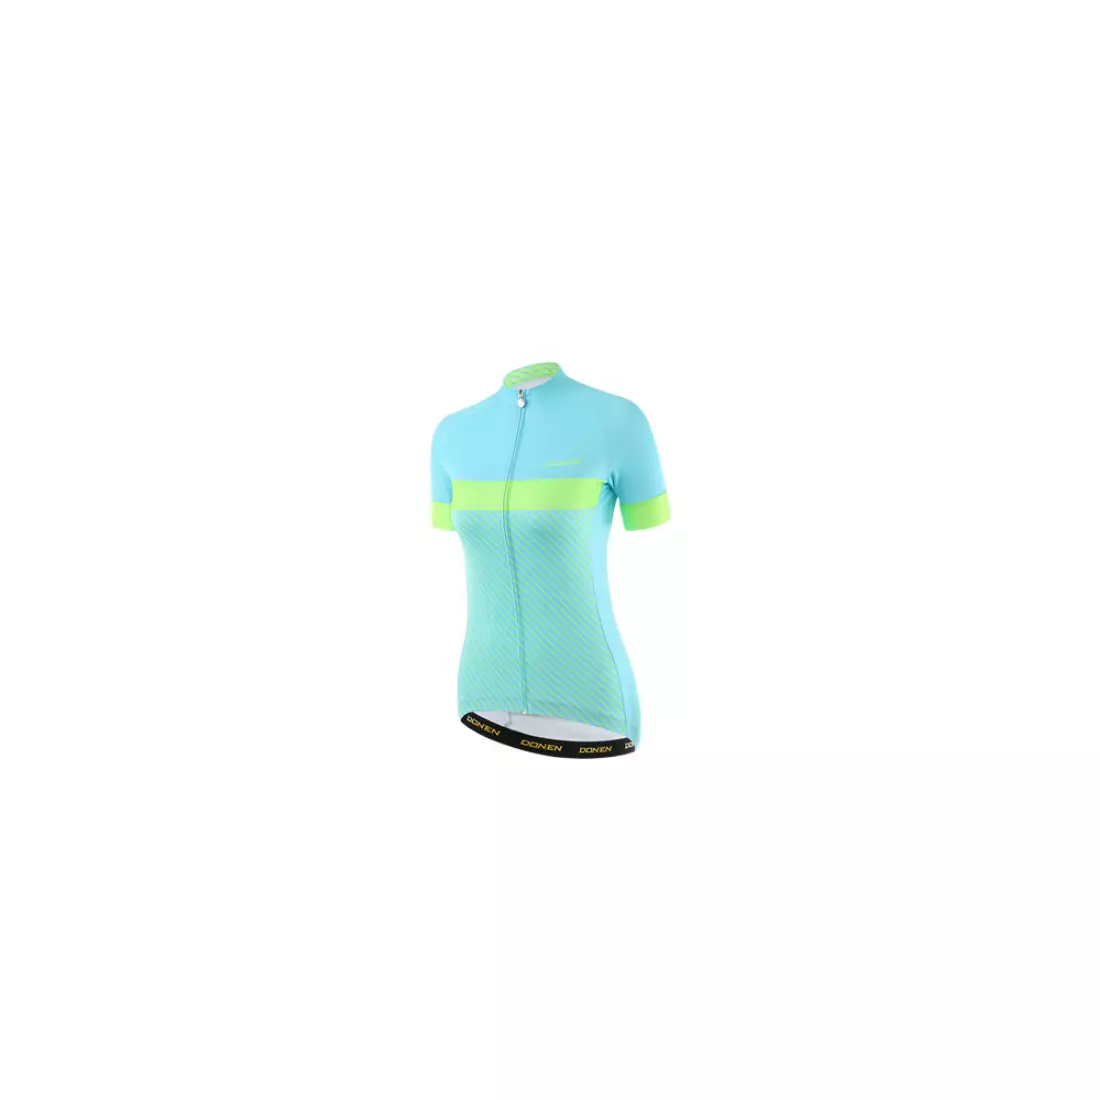 DONEN Women Bicycle T-shirt turquoise green